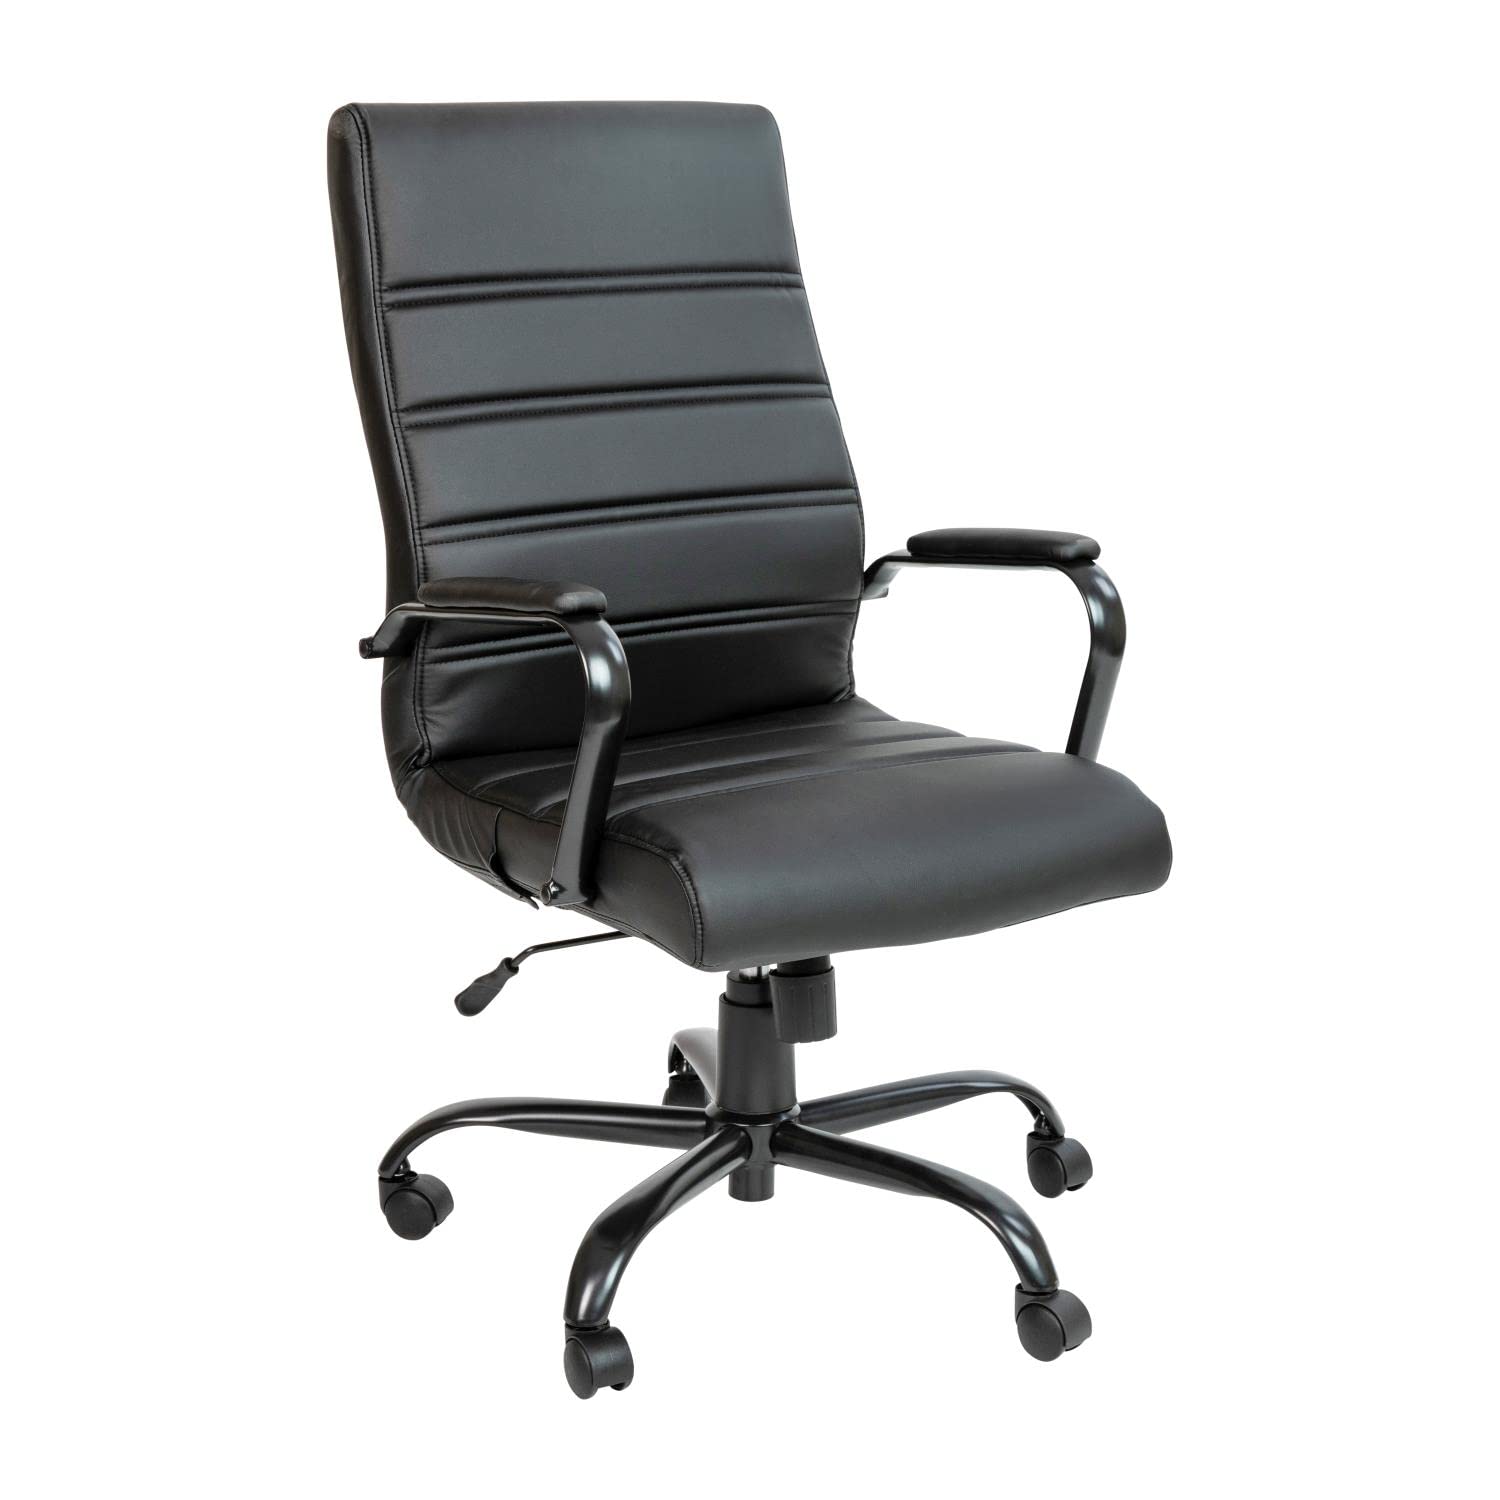 Flash Furniture كرسي مكتب ظهر مرتفع - كرسي مكتب تنفيذي دوار من الجلد الأسود بإطار أسود - كرسي بذراع دوار